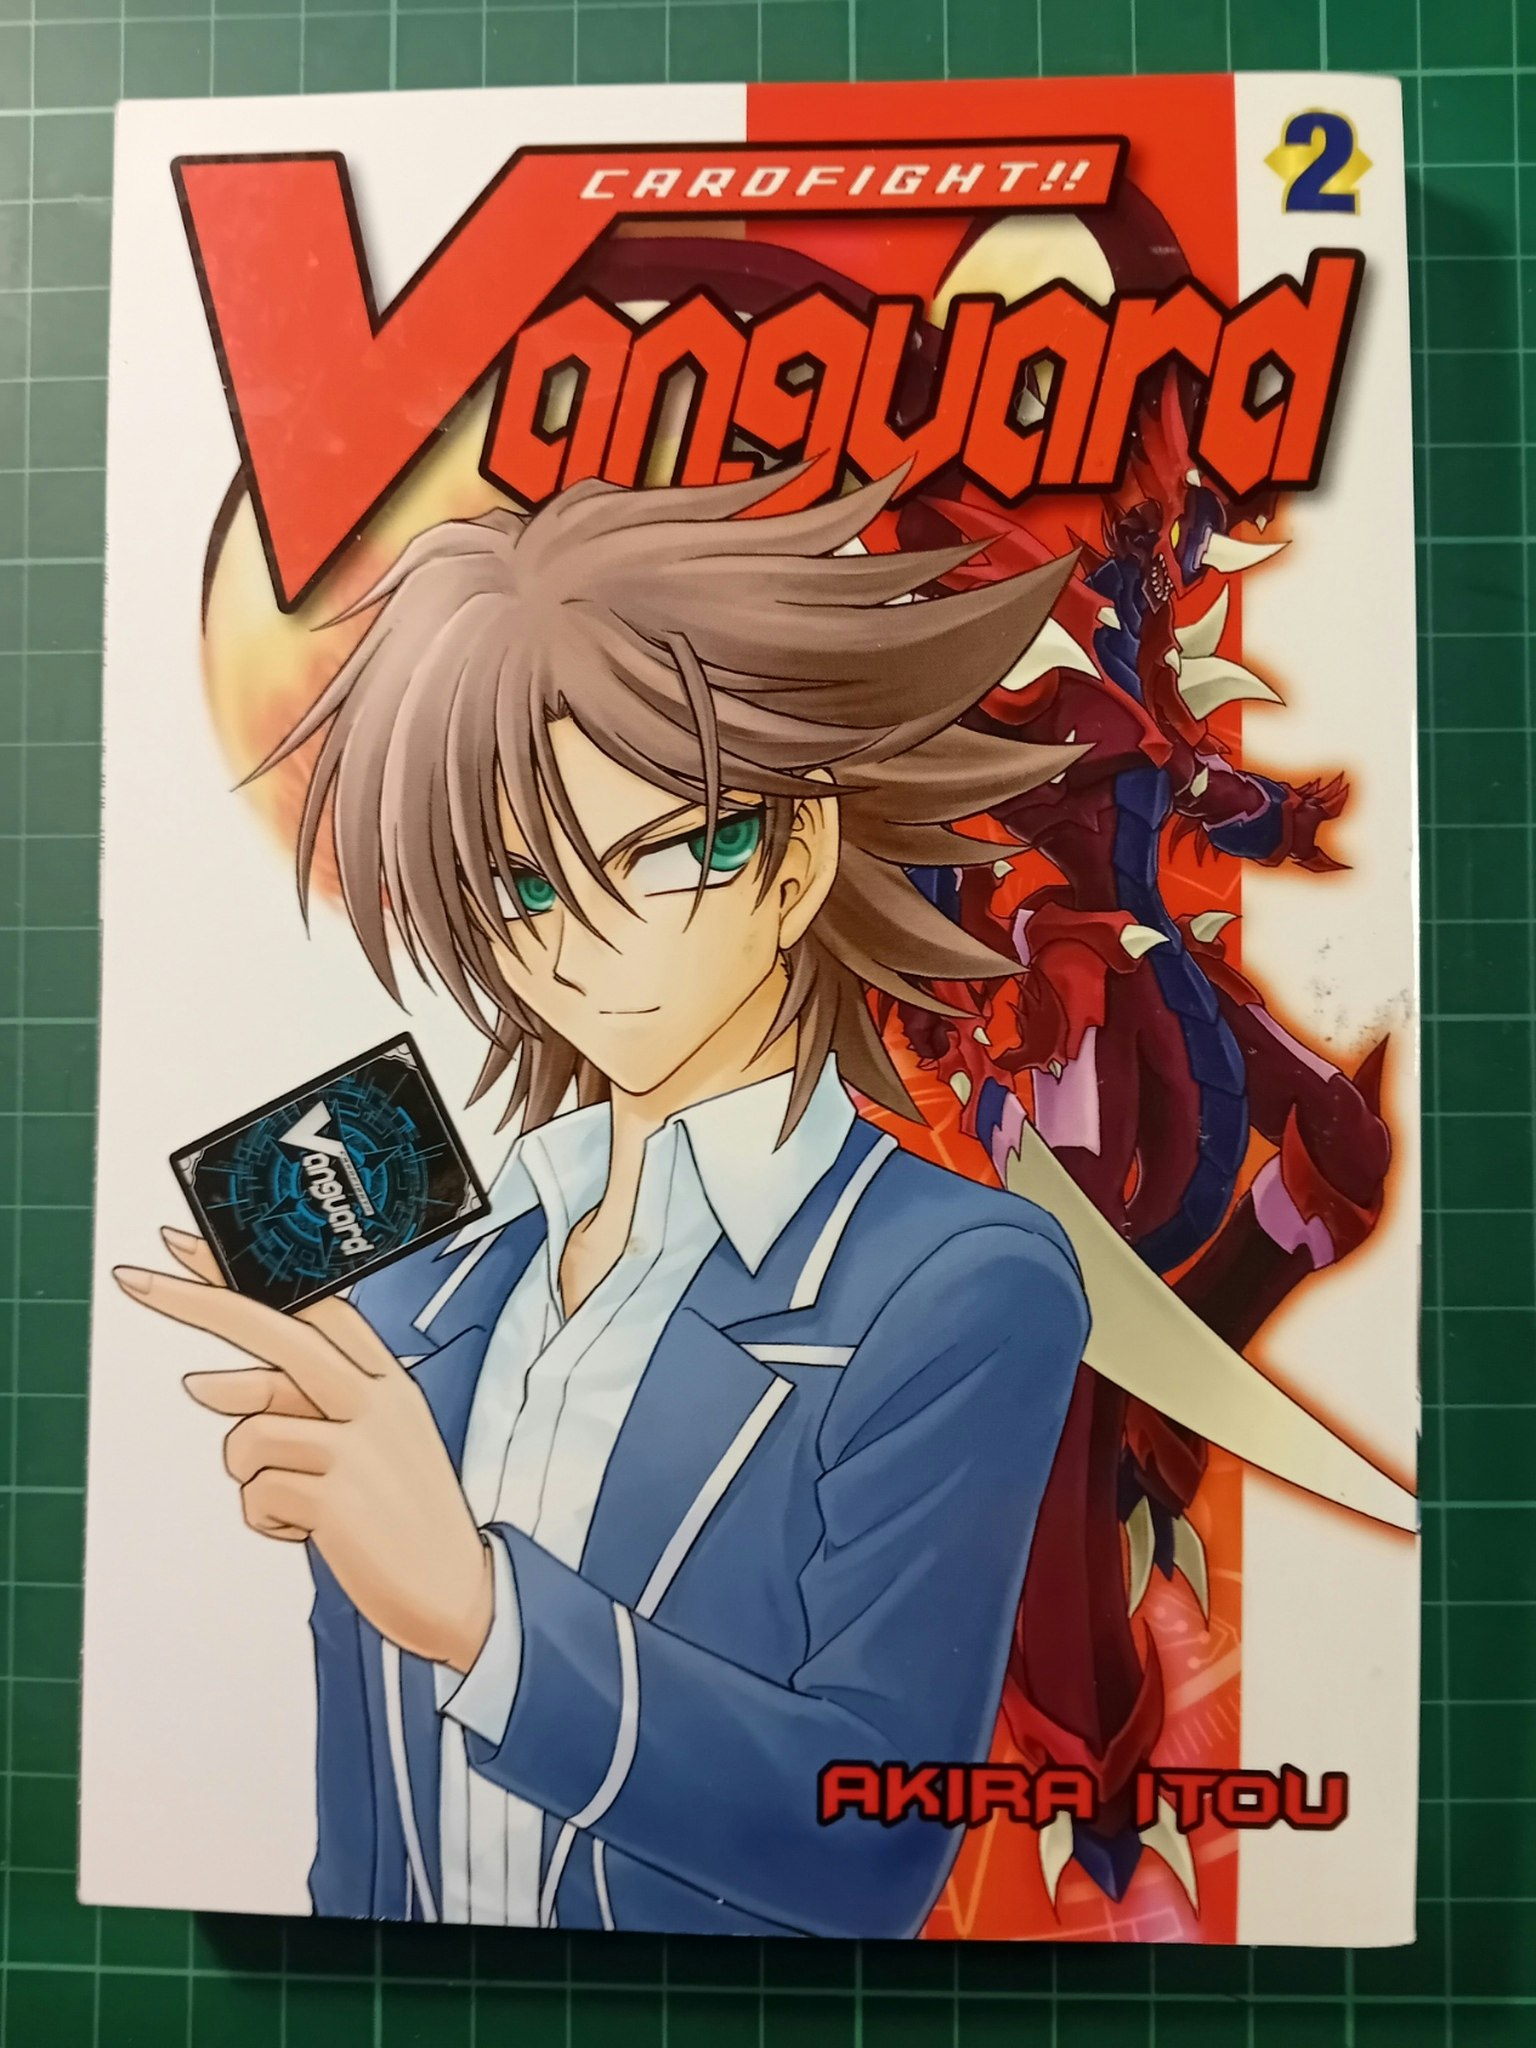 Cardfight!! Vanguard vol 02 (USA)